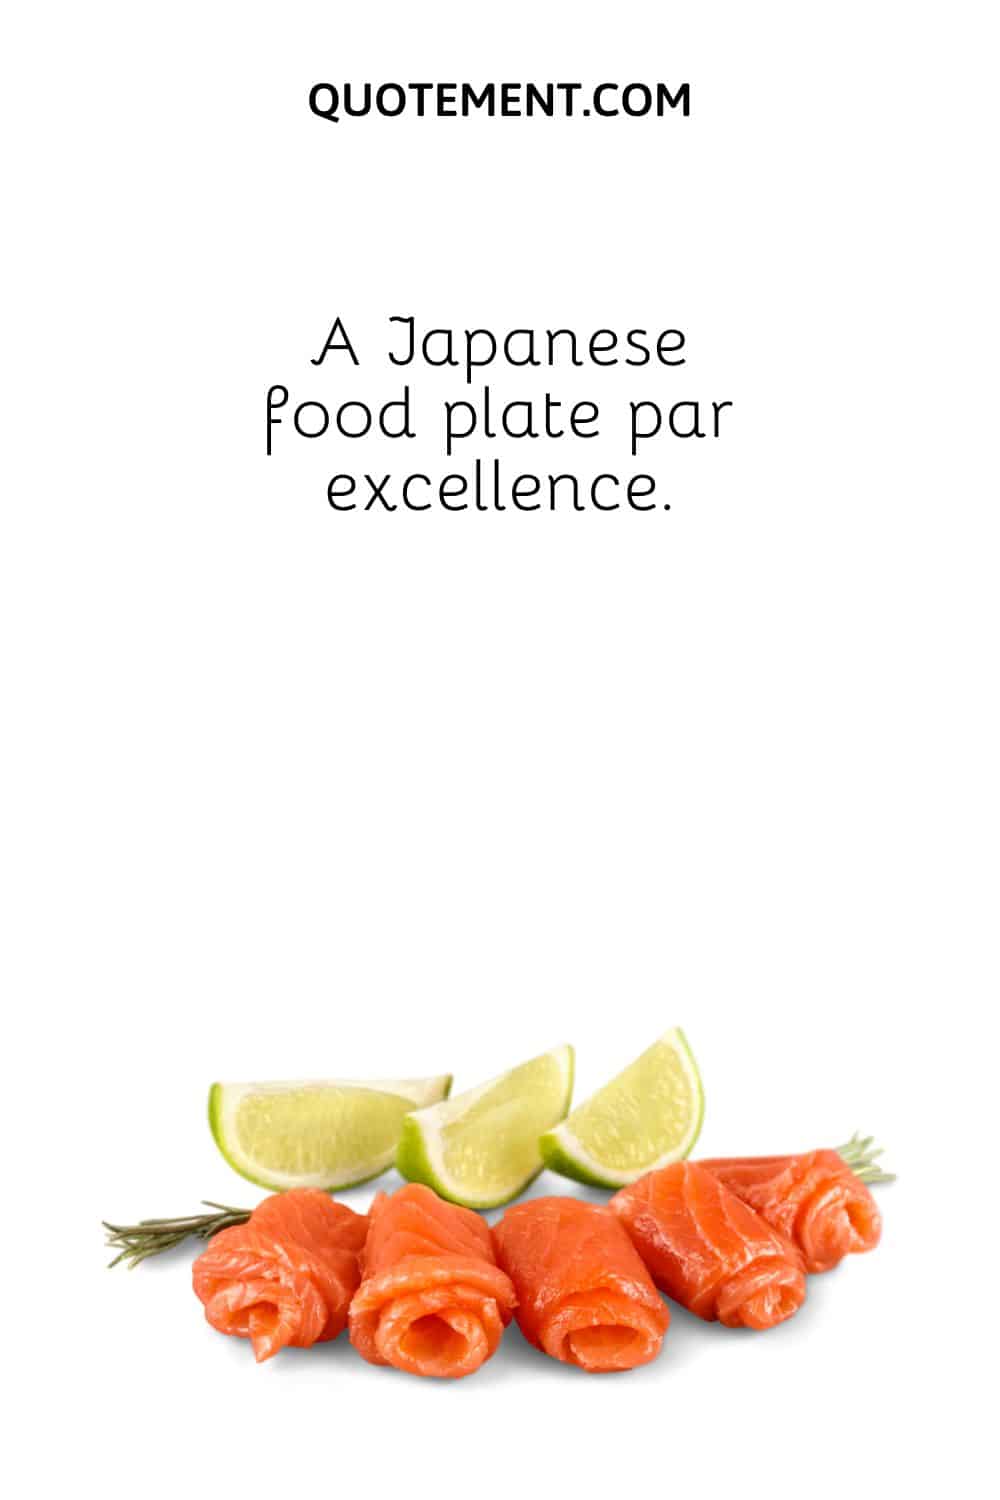 A Japanese food plate par excellence.